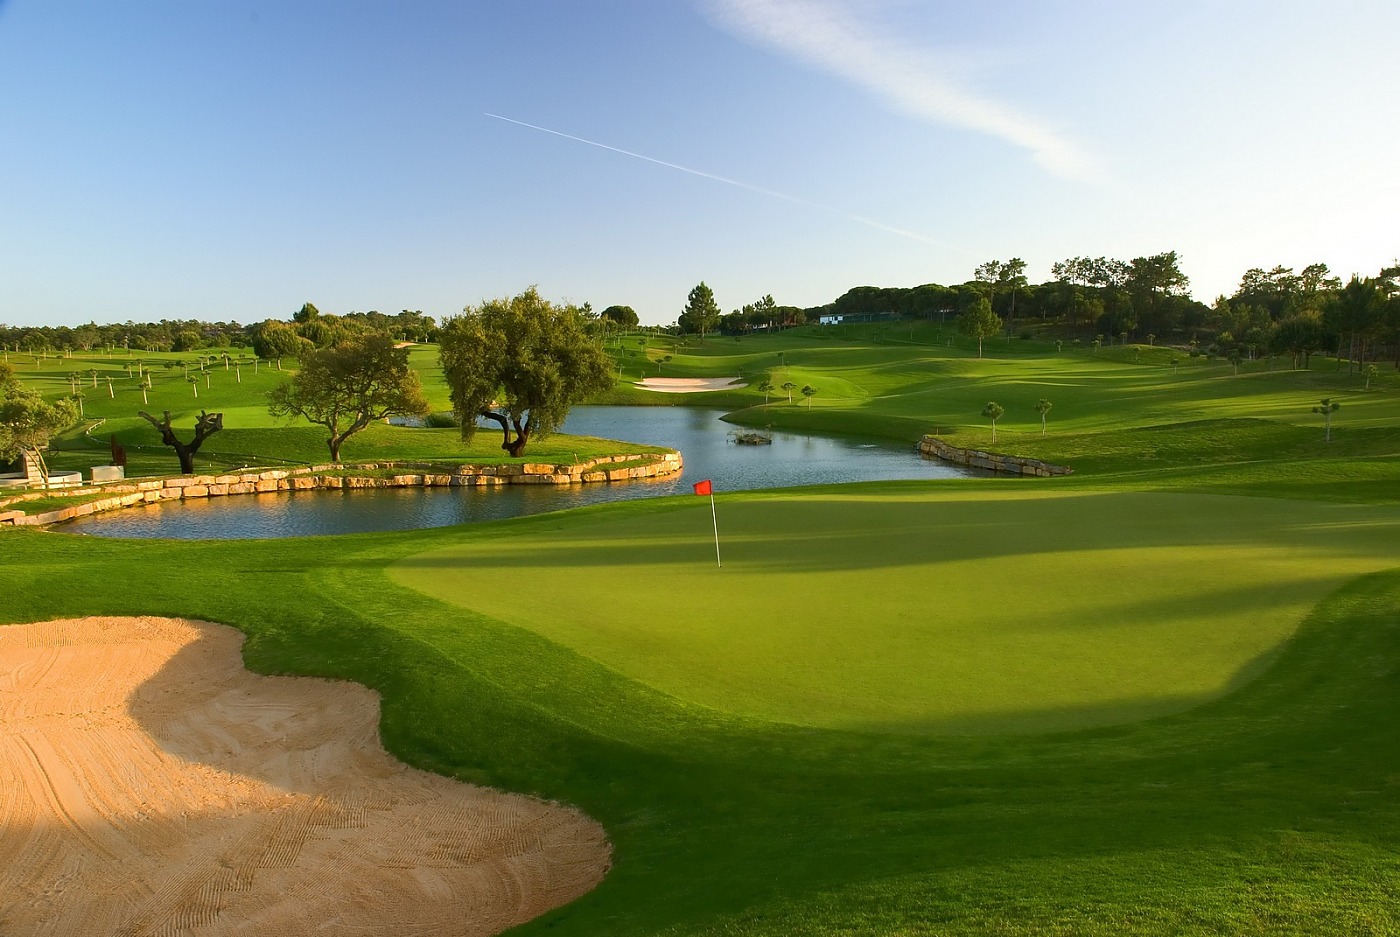 Pinheiros Altos Golf Course